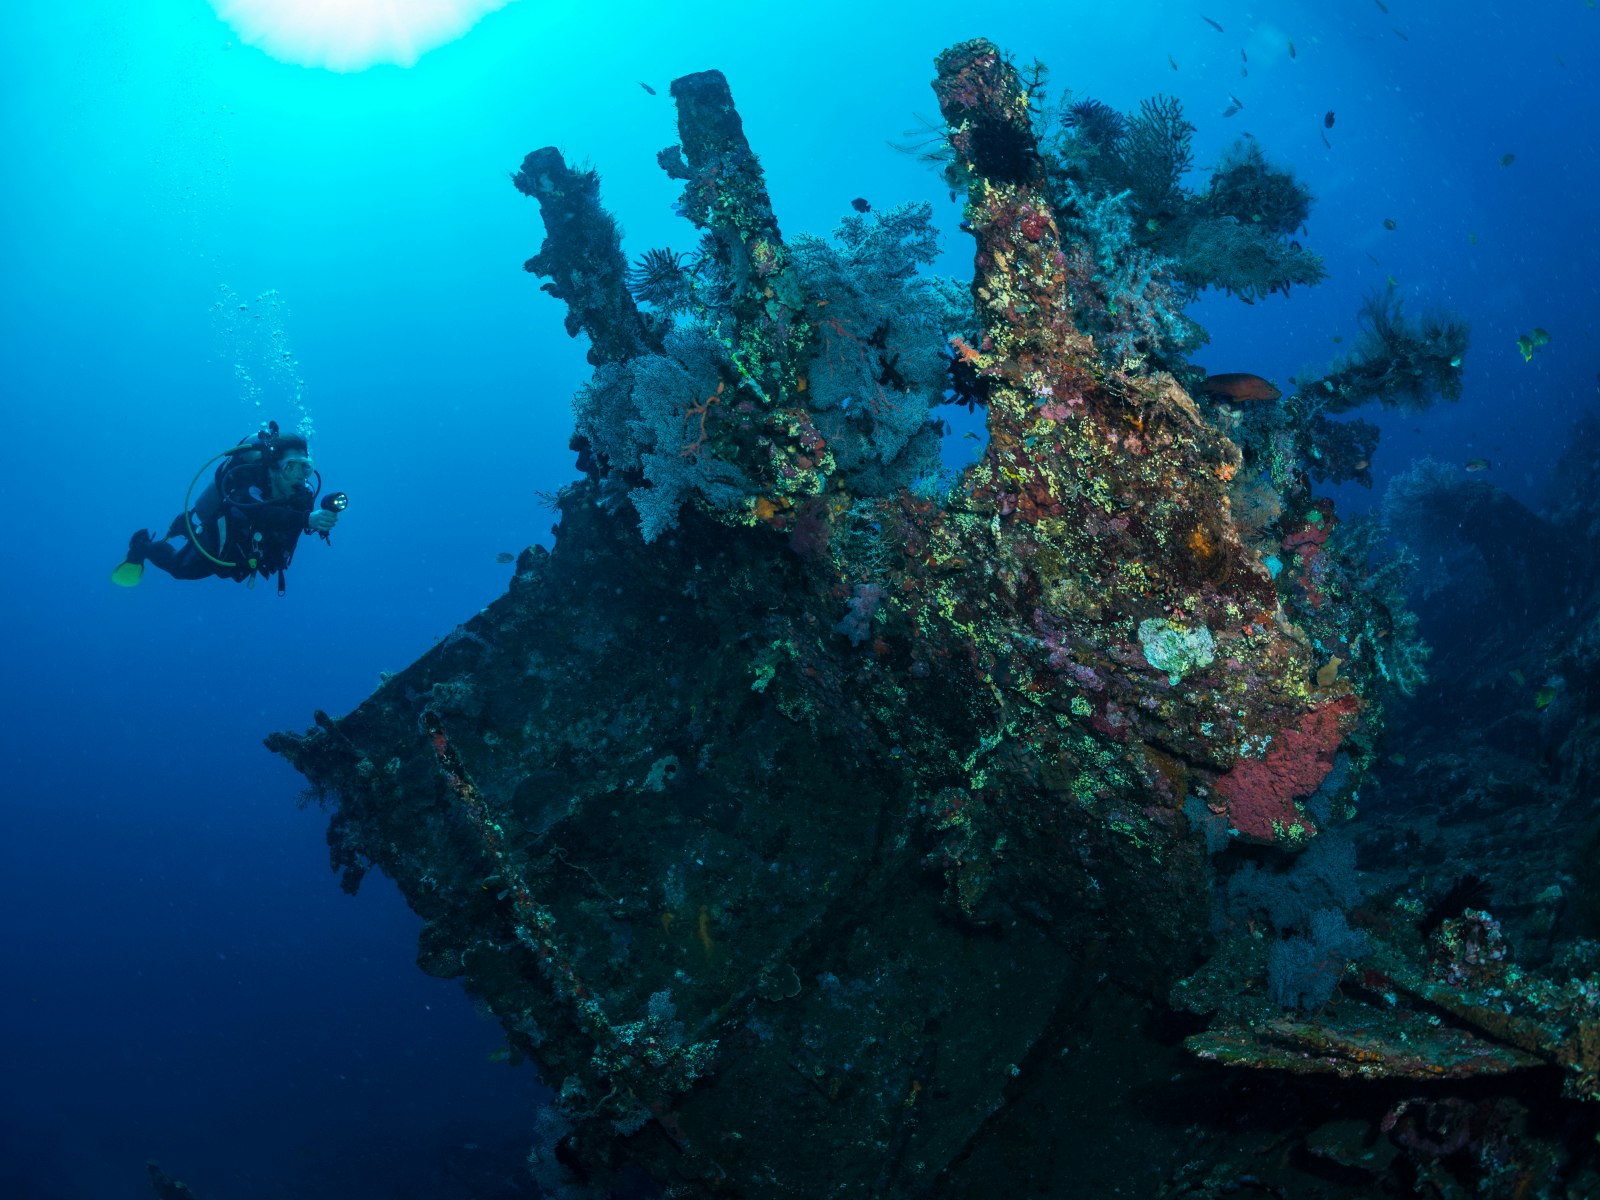 Diving the Liberty shipwreck in Tulamben, Bali